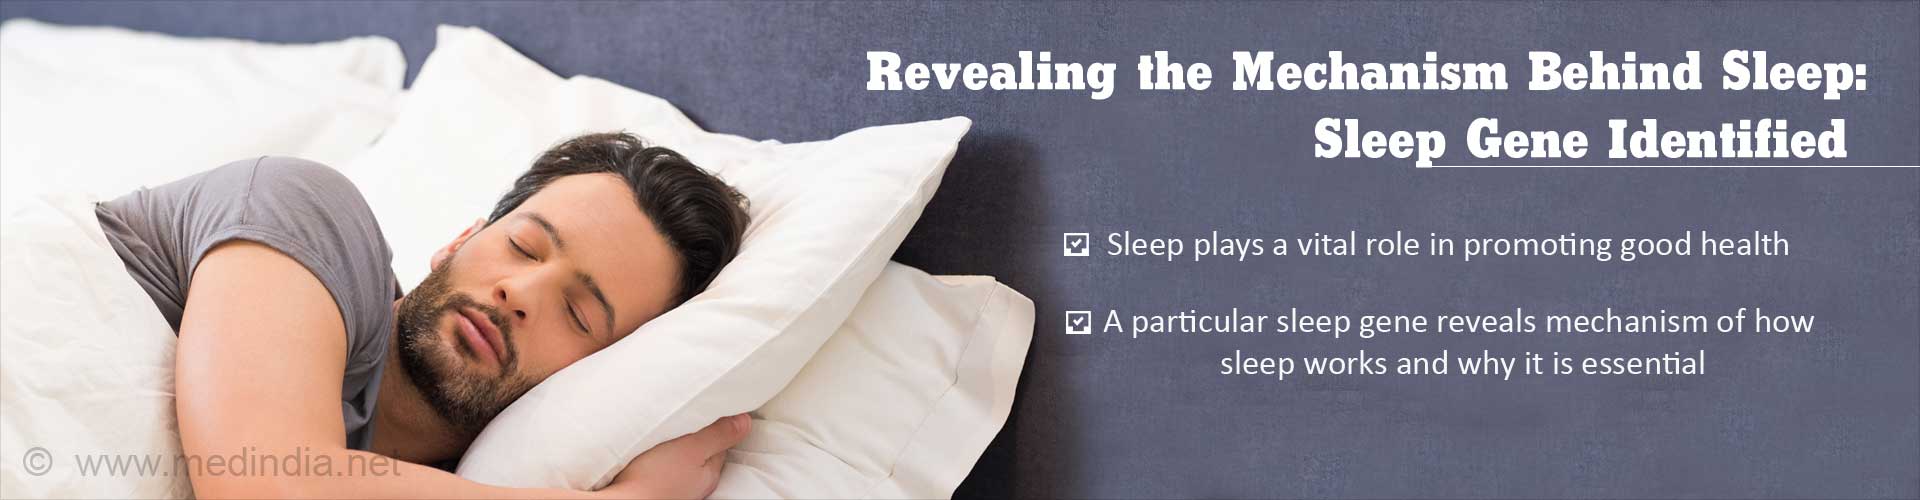 Revealing the mechanism behind sleep: sleep gene identified
- Sleep plays a vital role in promoting good health
- A particular sleep gene reveals mechanism of how sleep works and why it is essential
